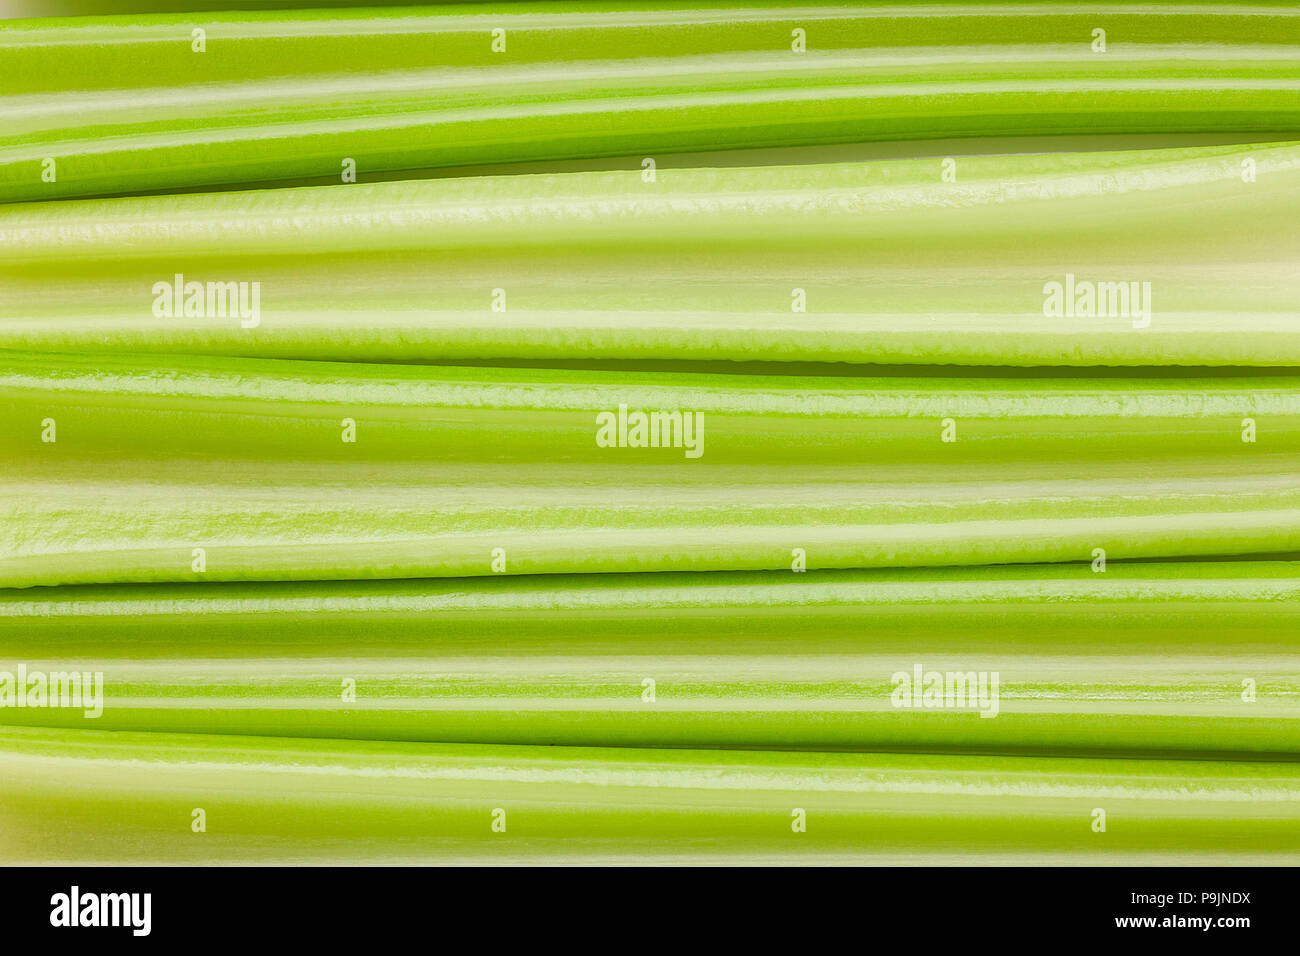 celery background, full depth of field Stock Photo